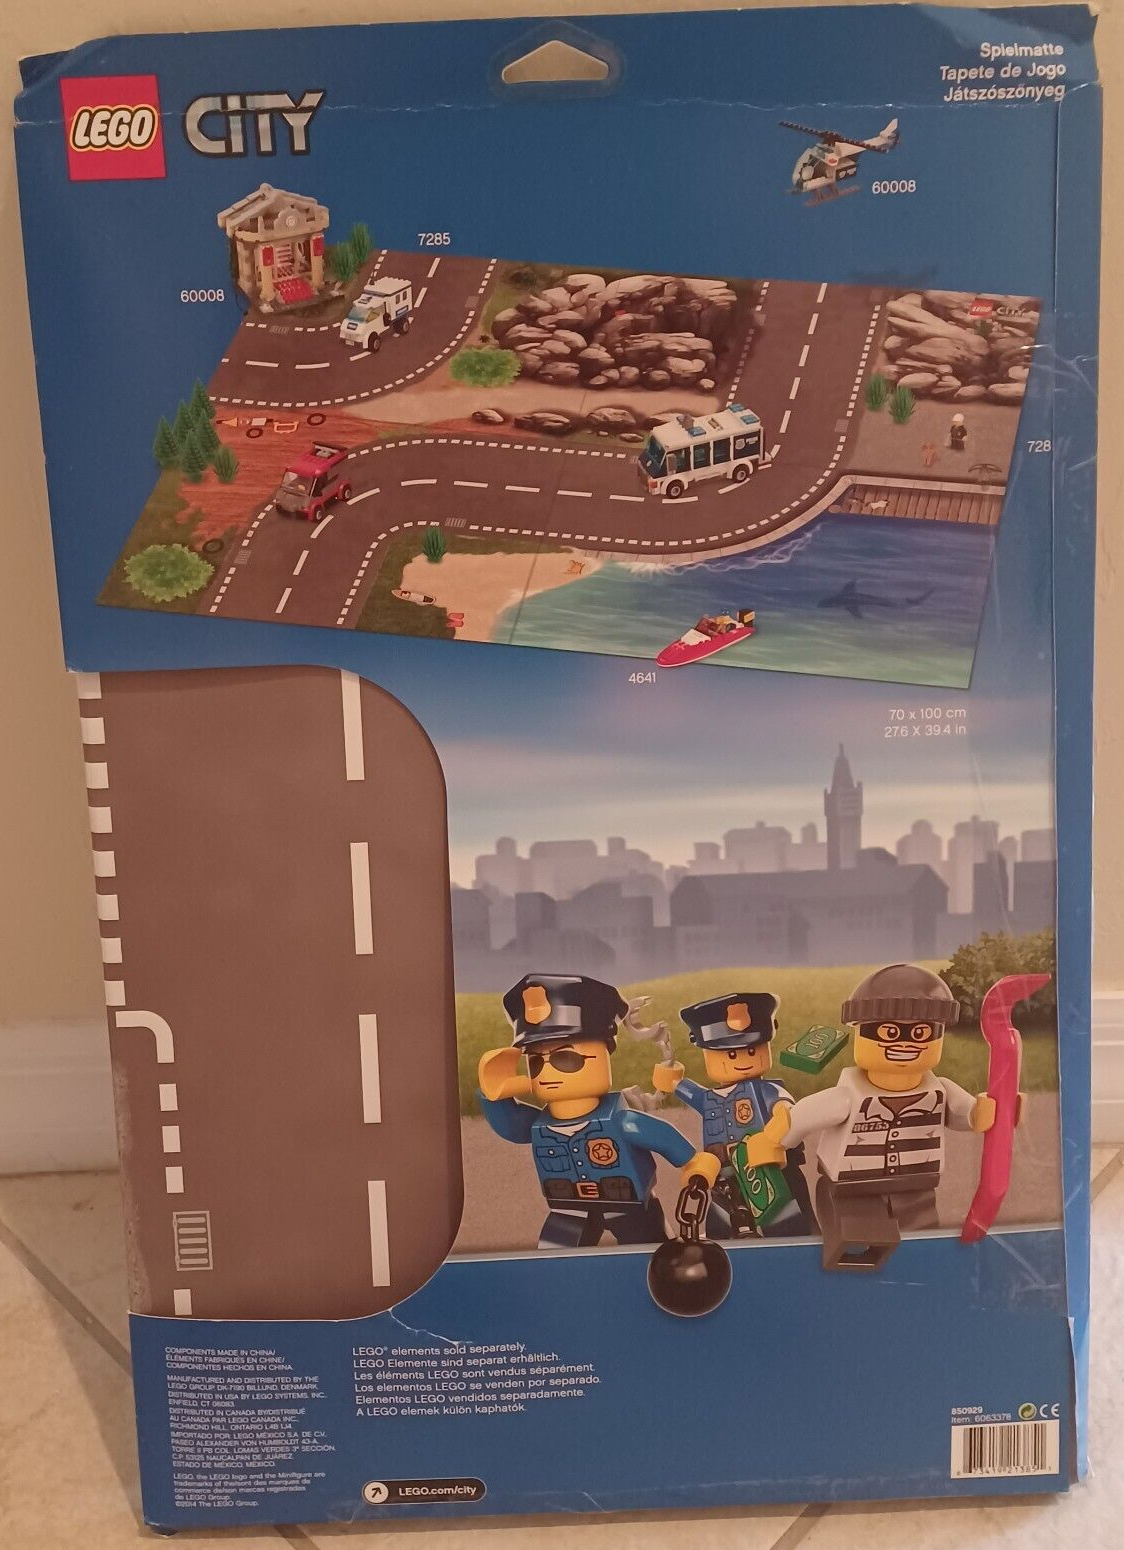 ::Lego city playmat 27.6" x 39.4"  x 27 1/2" playboard 60008